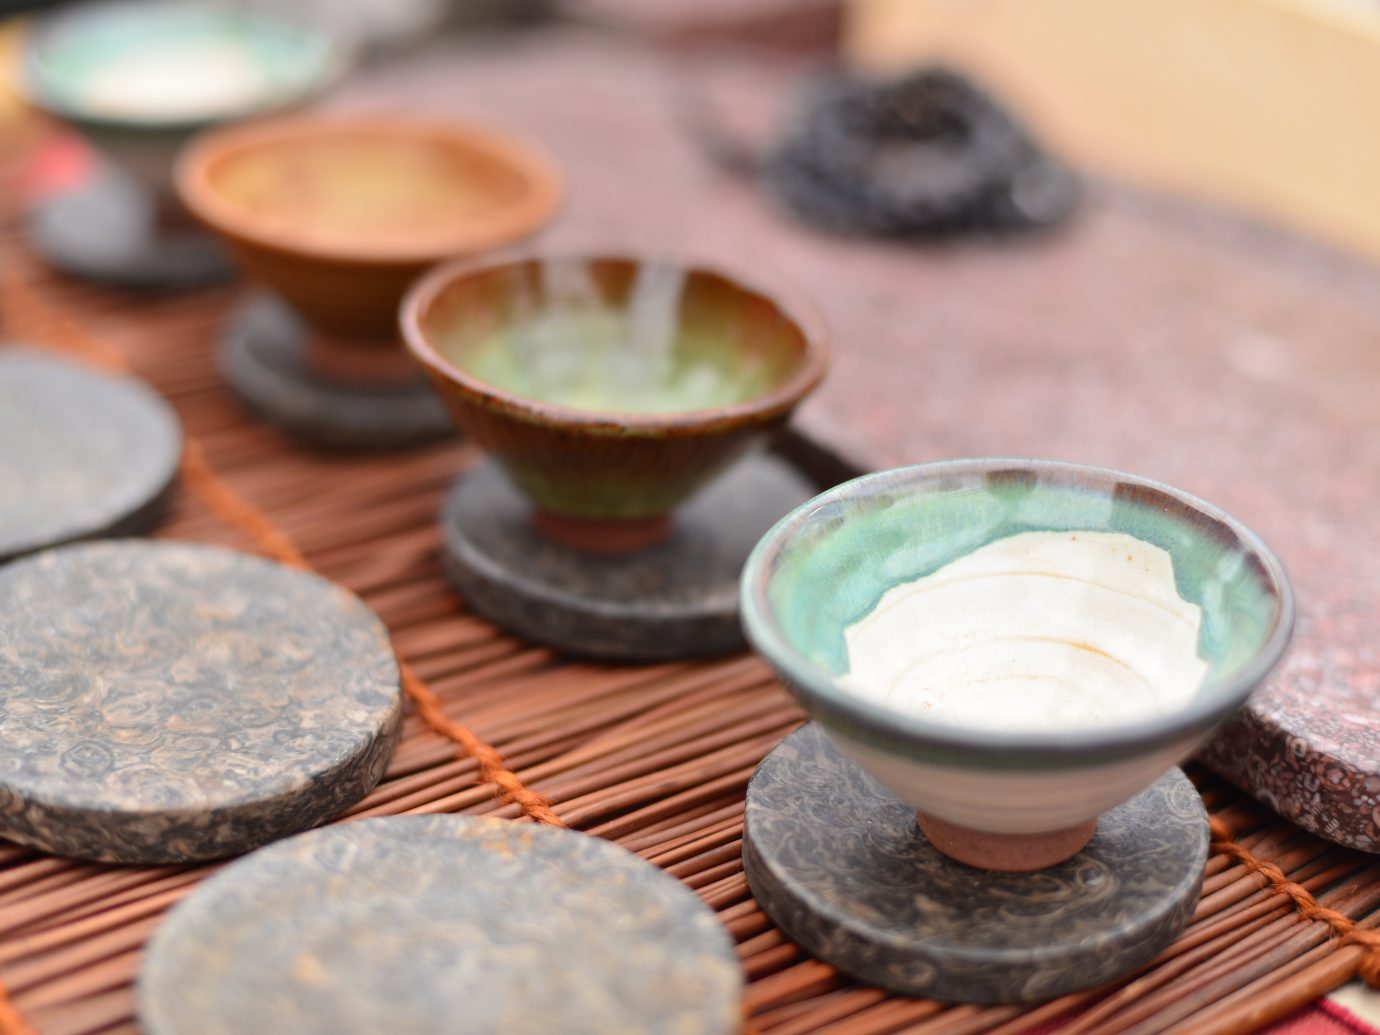 pottery tea set on market stall for sale.